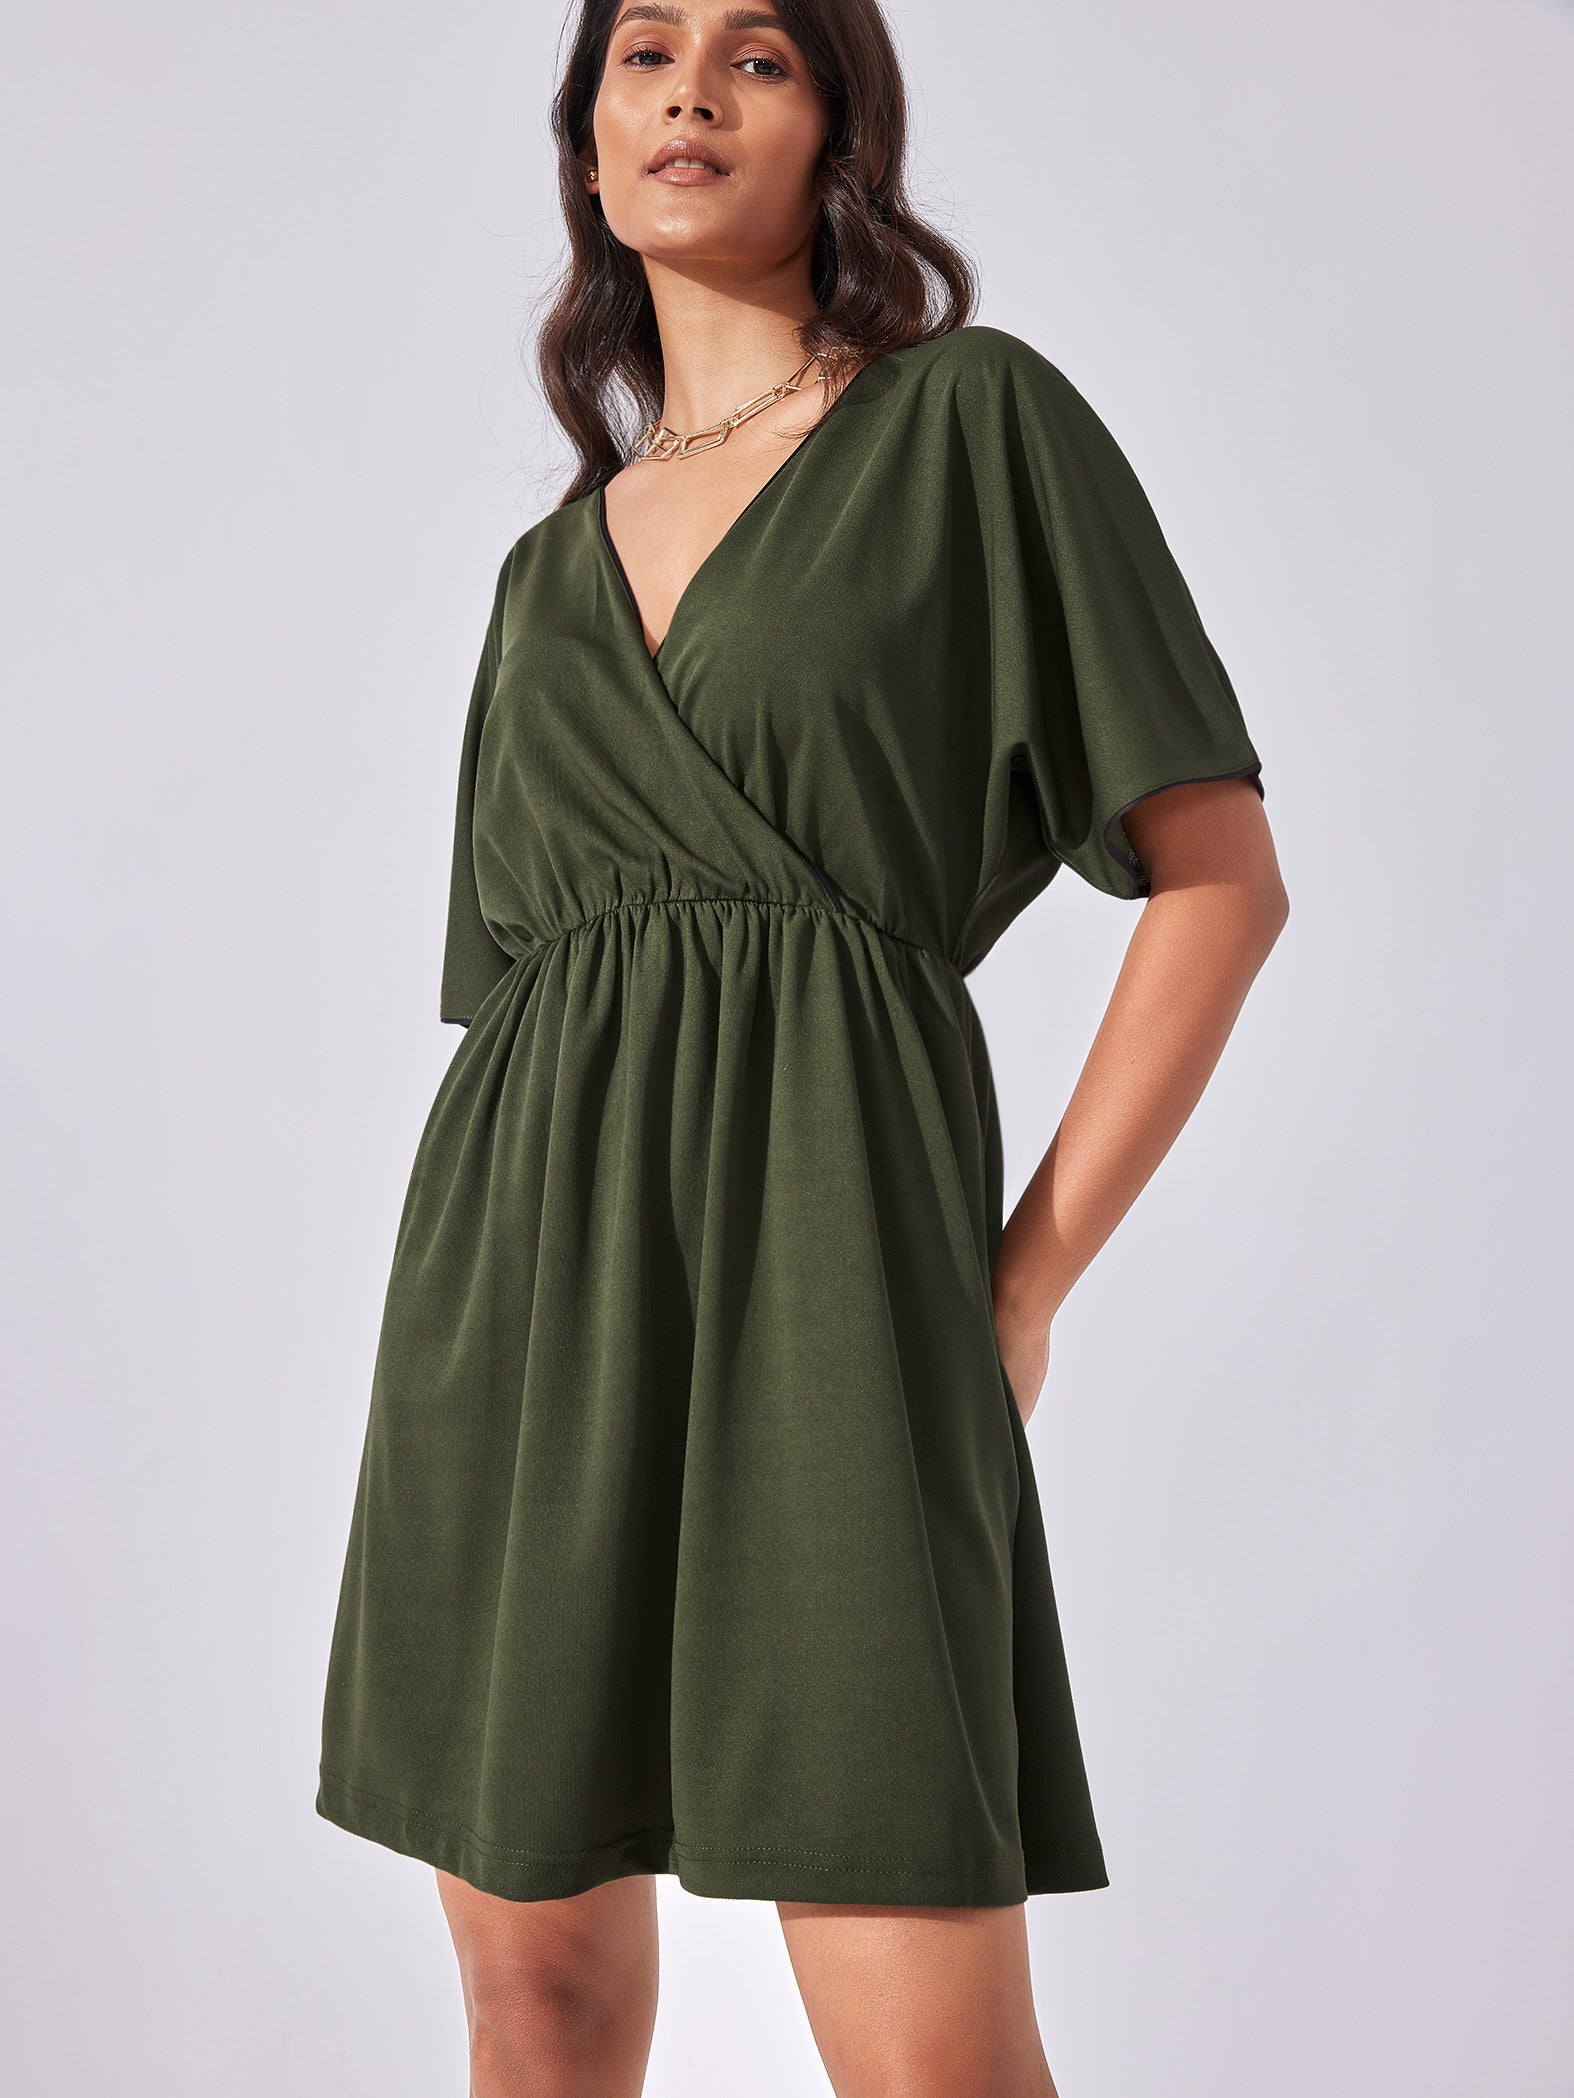 Olive Textured Overlap Dress